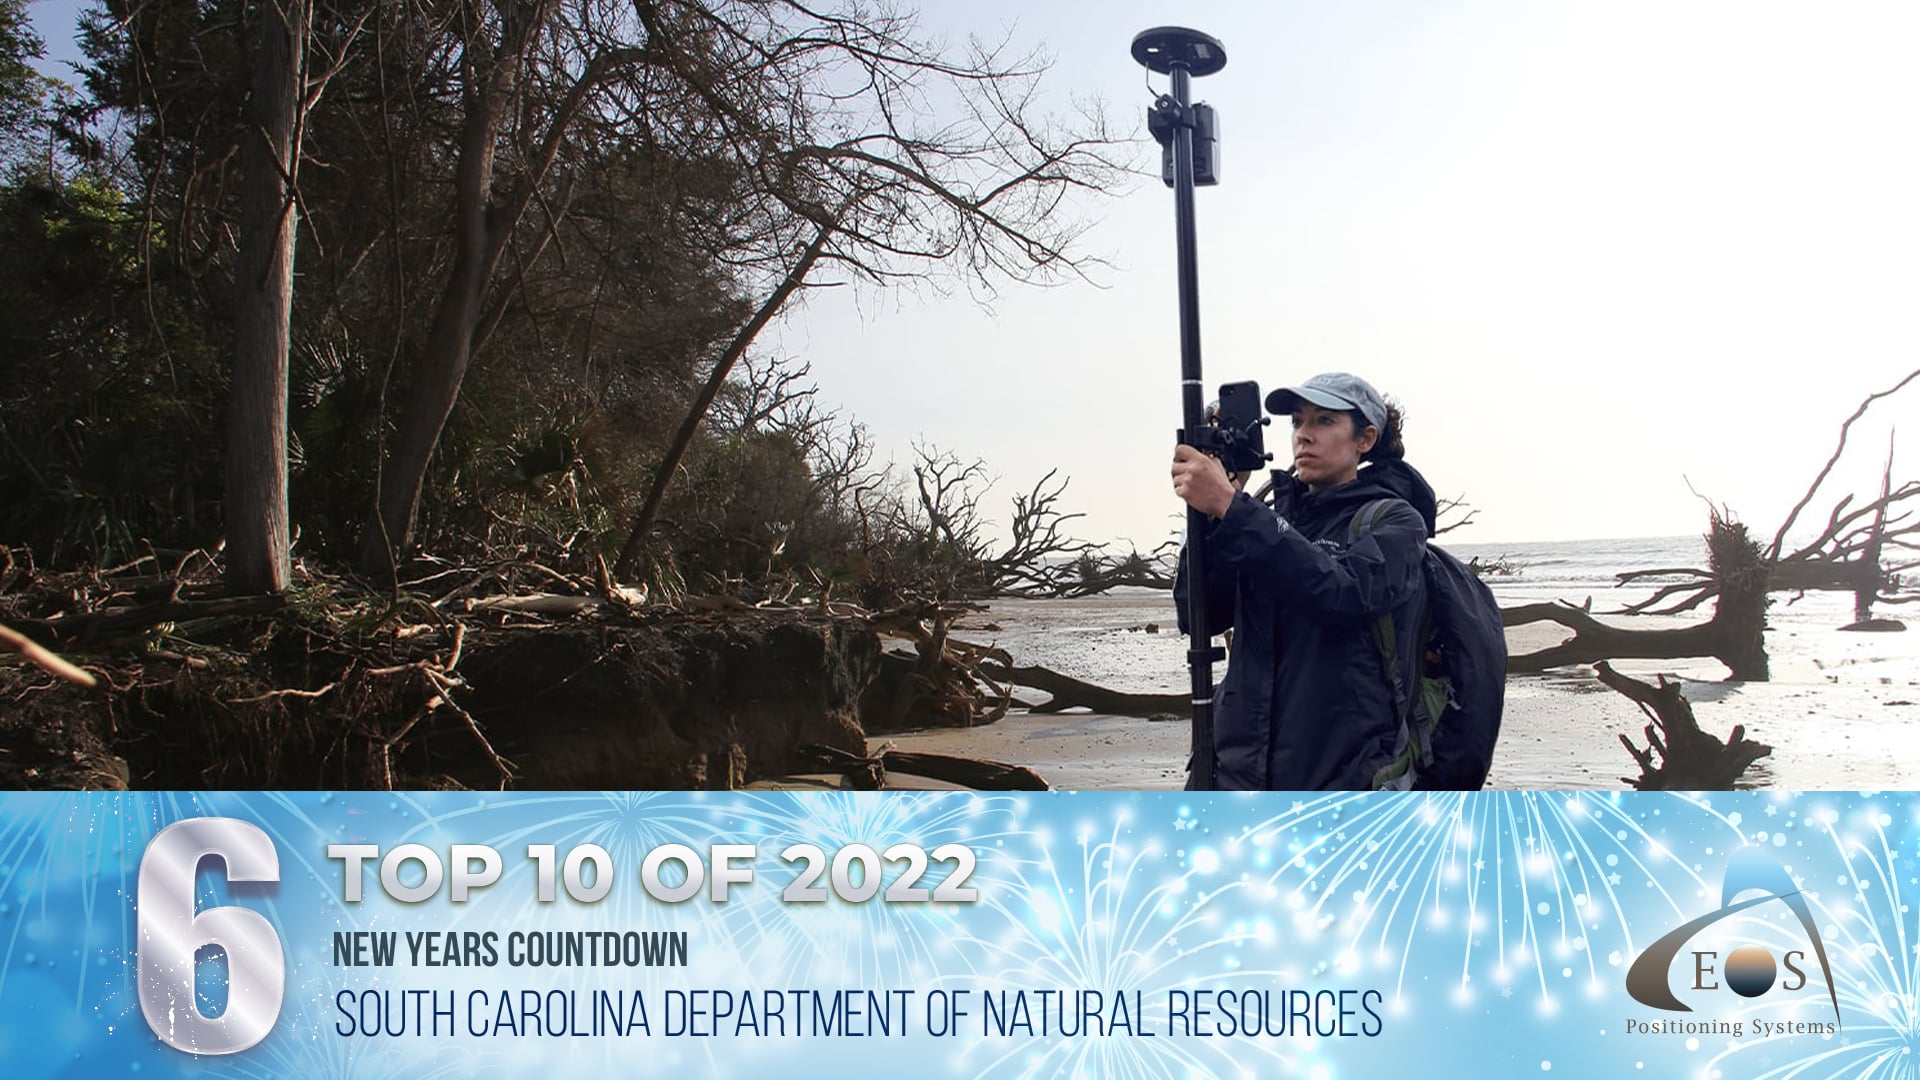 6 South Carolina Department of Natural Resources - Top 10 of 2022